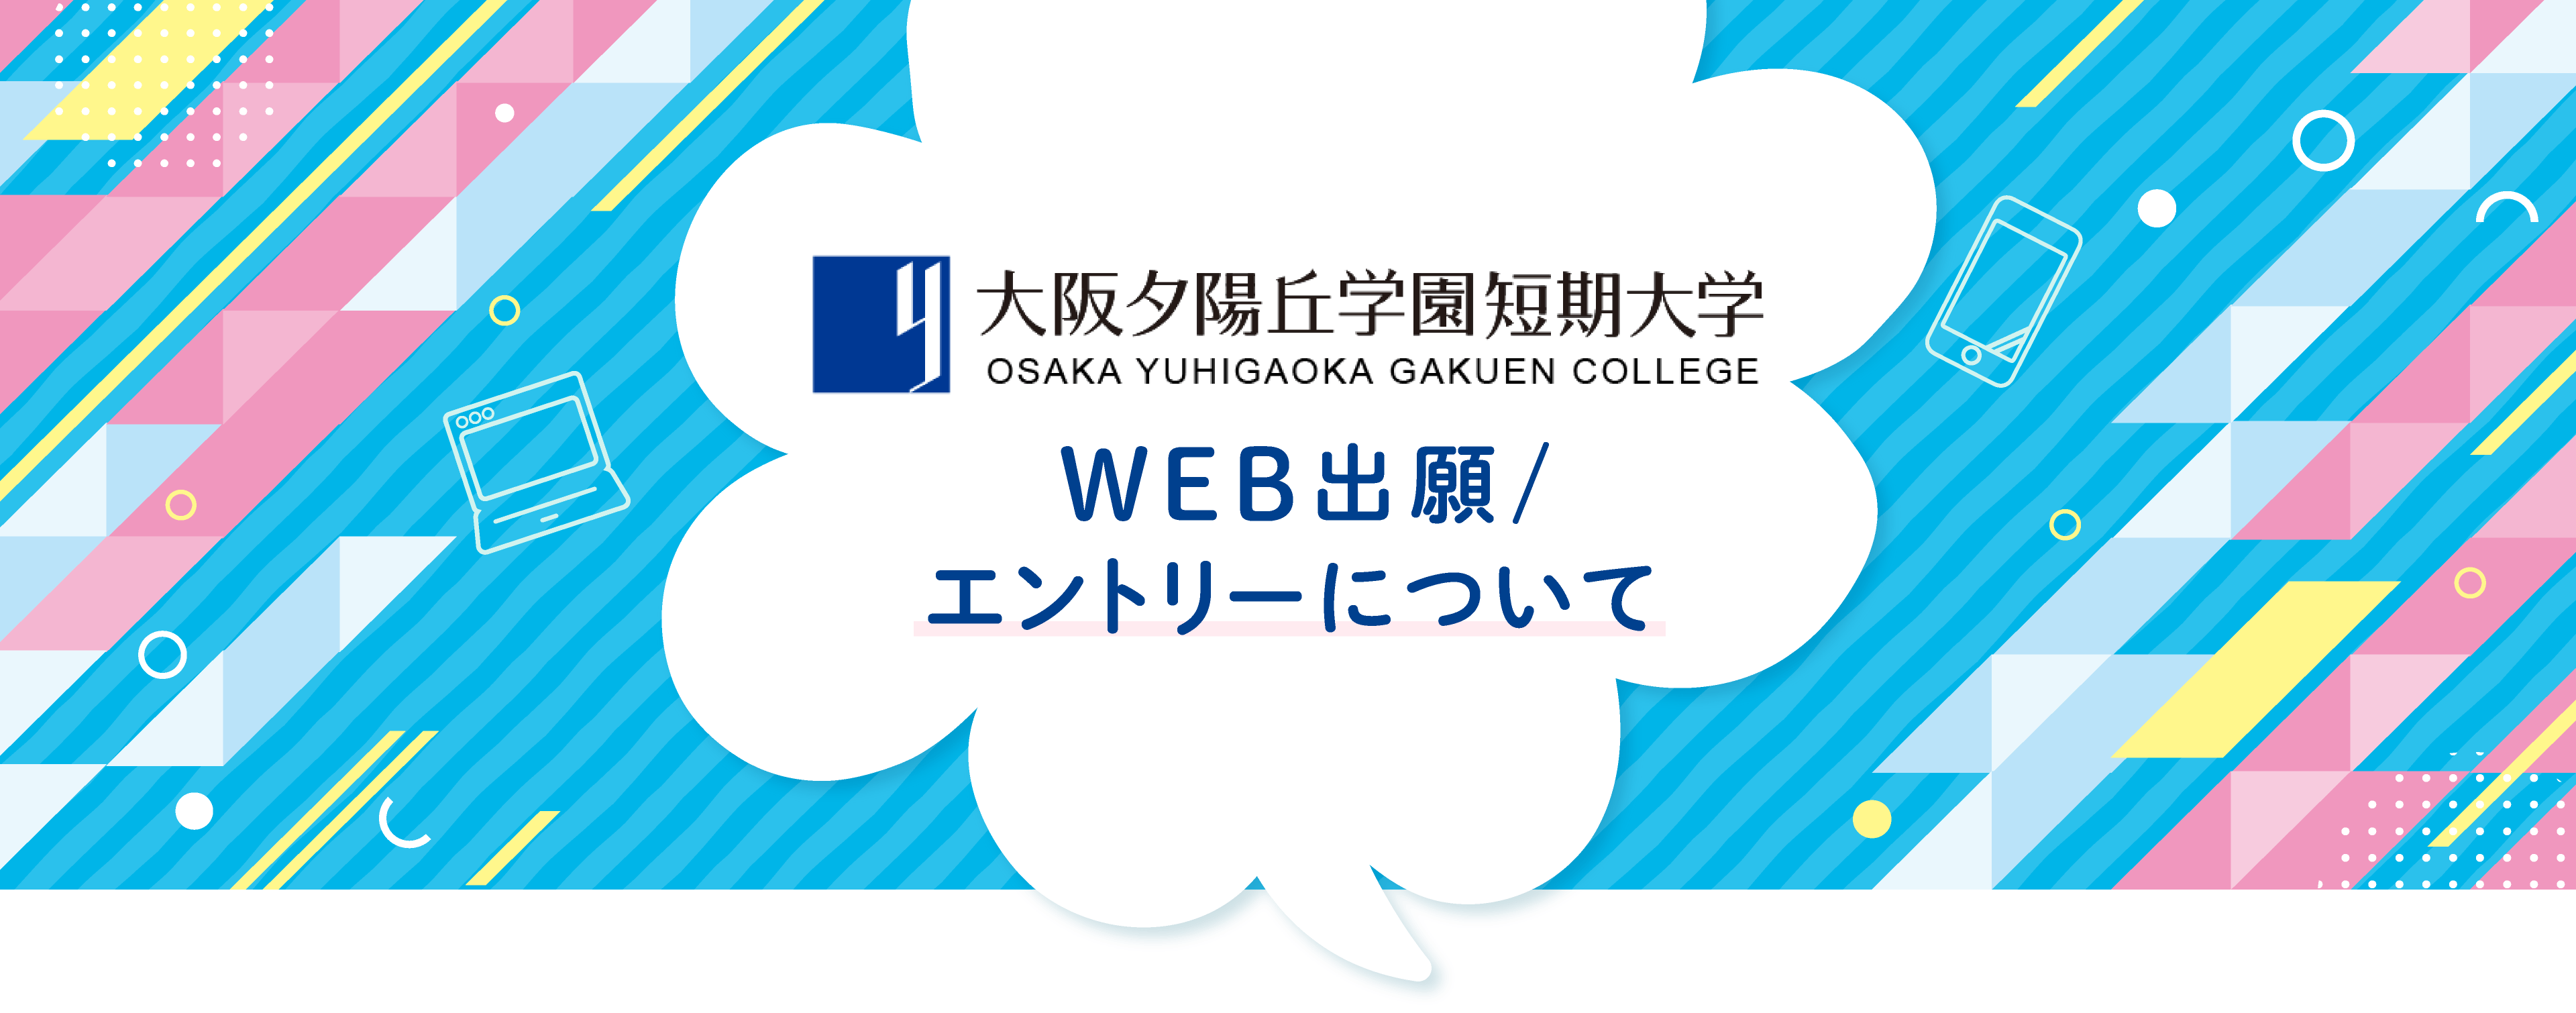 Osaka yuhigaoka gakuen college